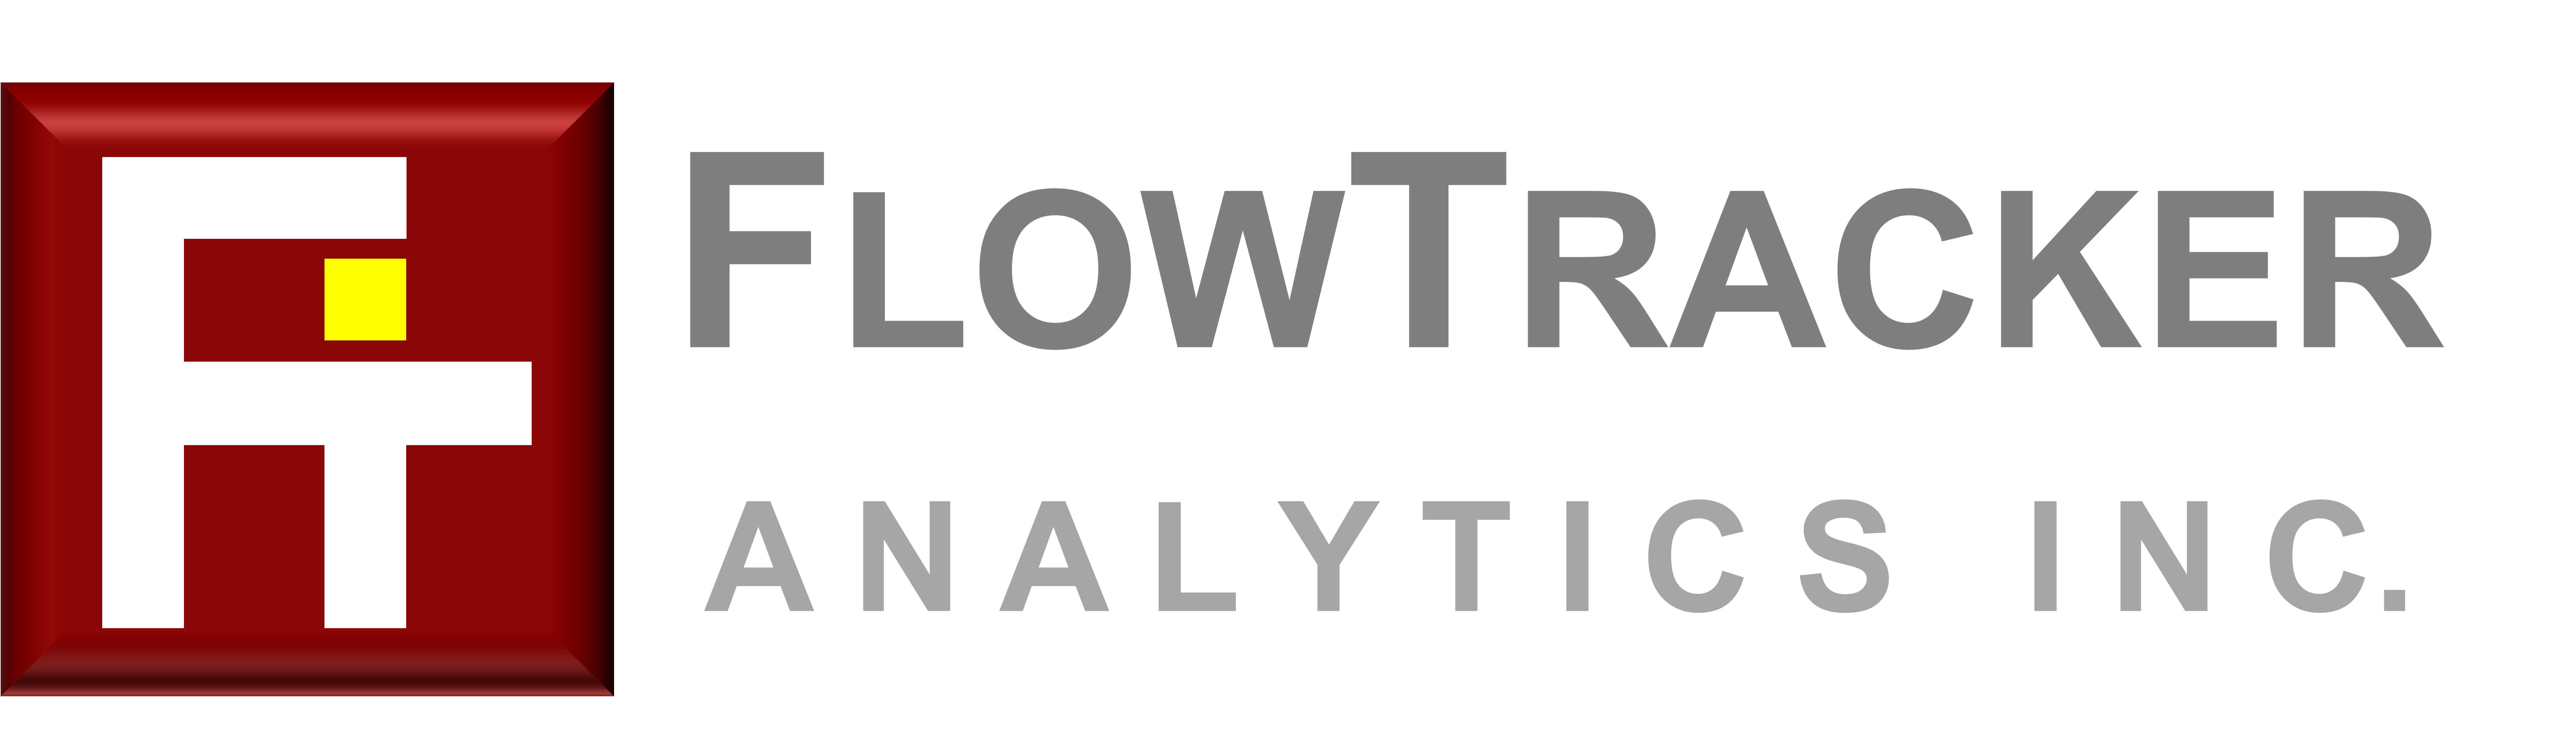 Flowtracker Analytics logo